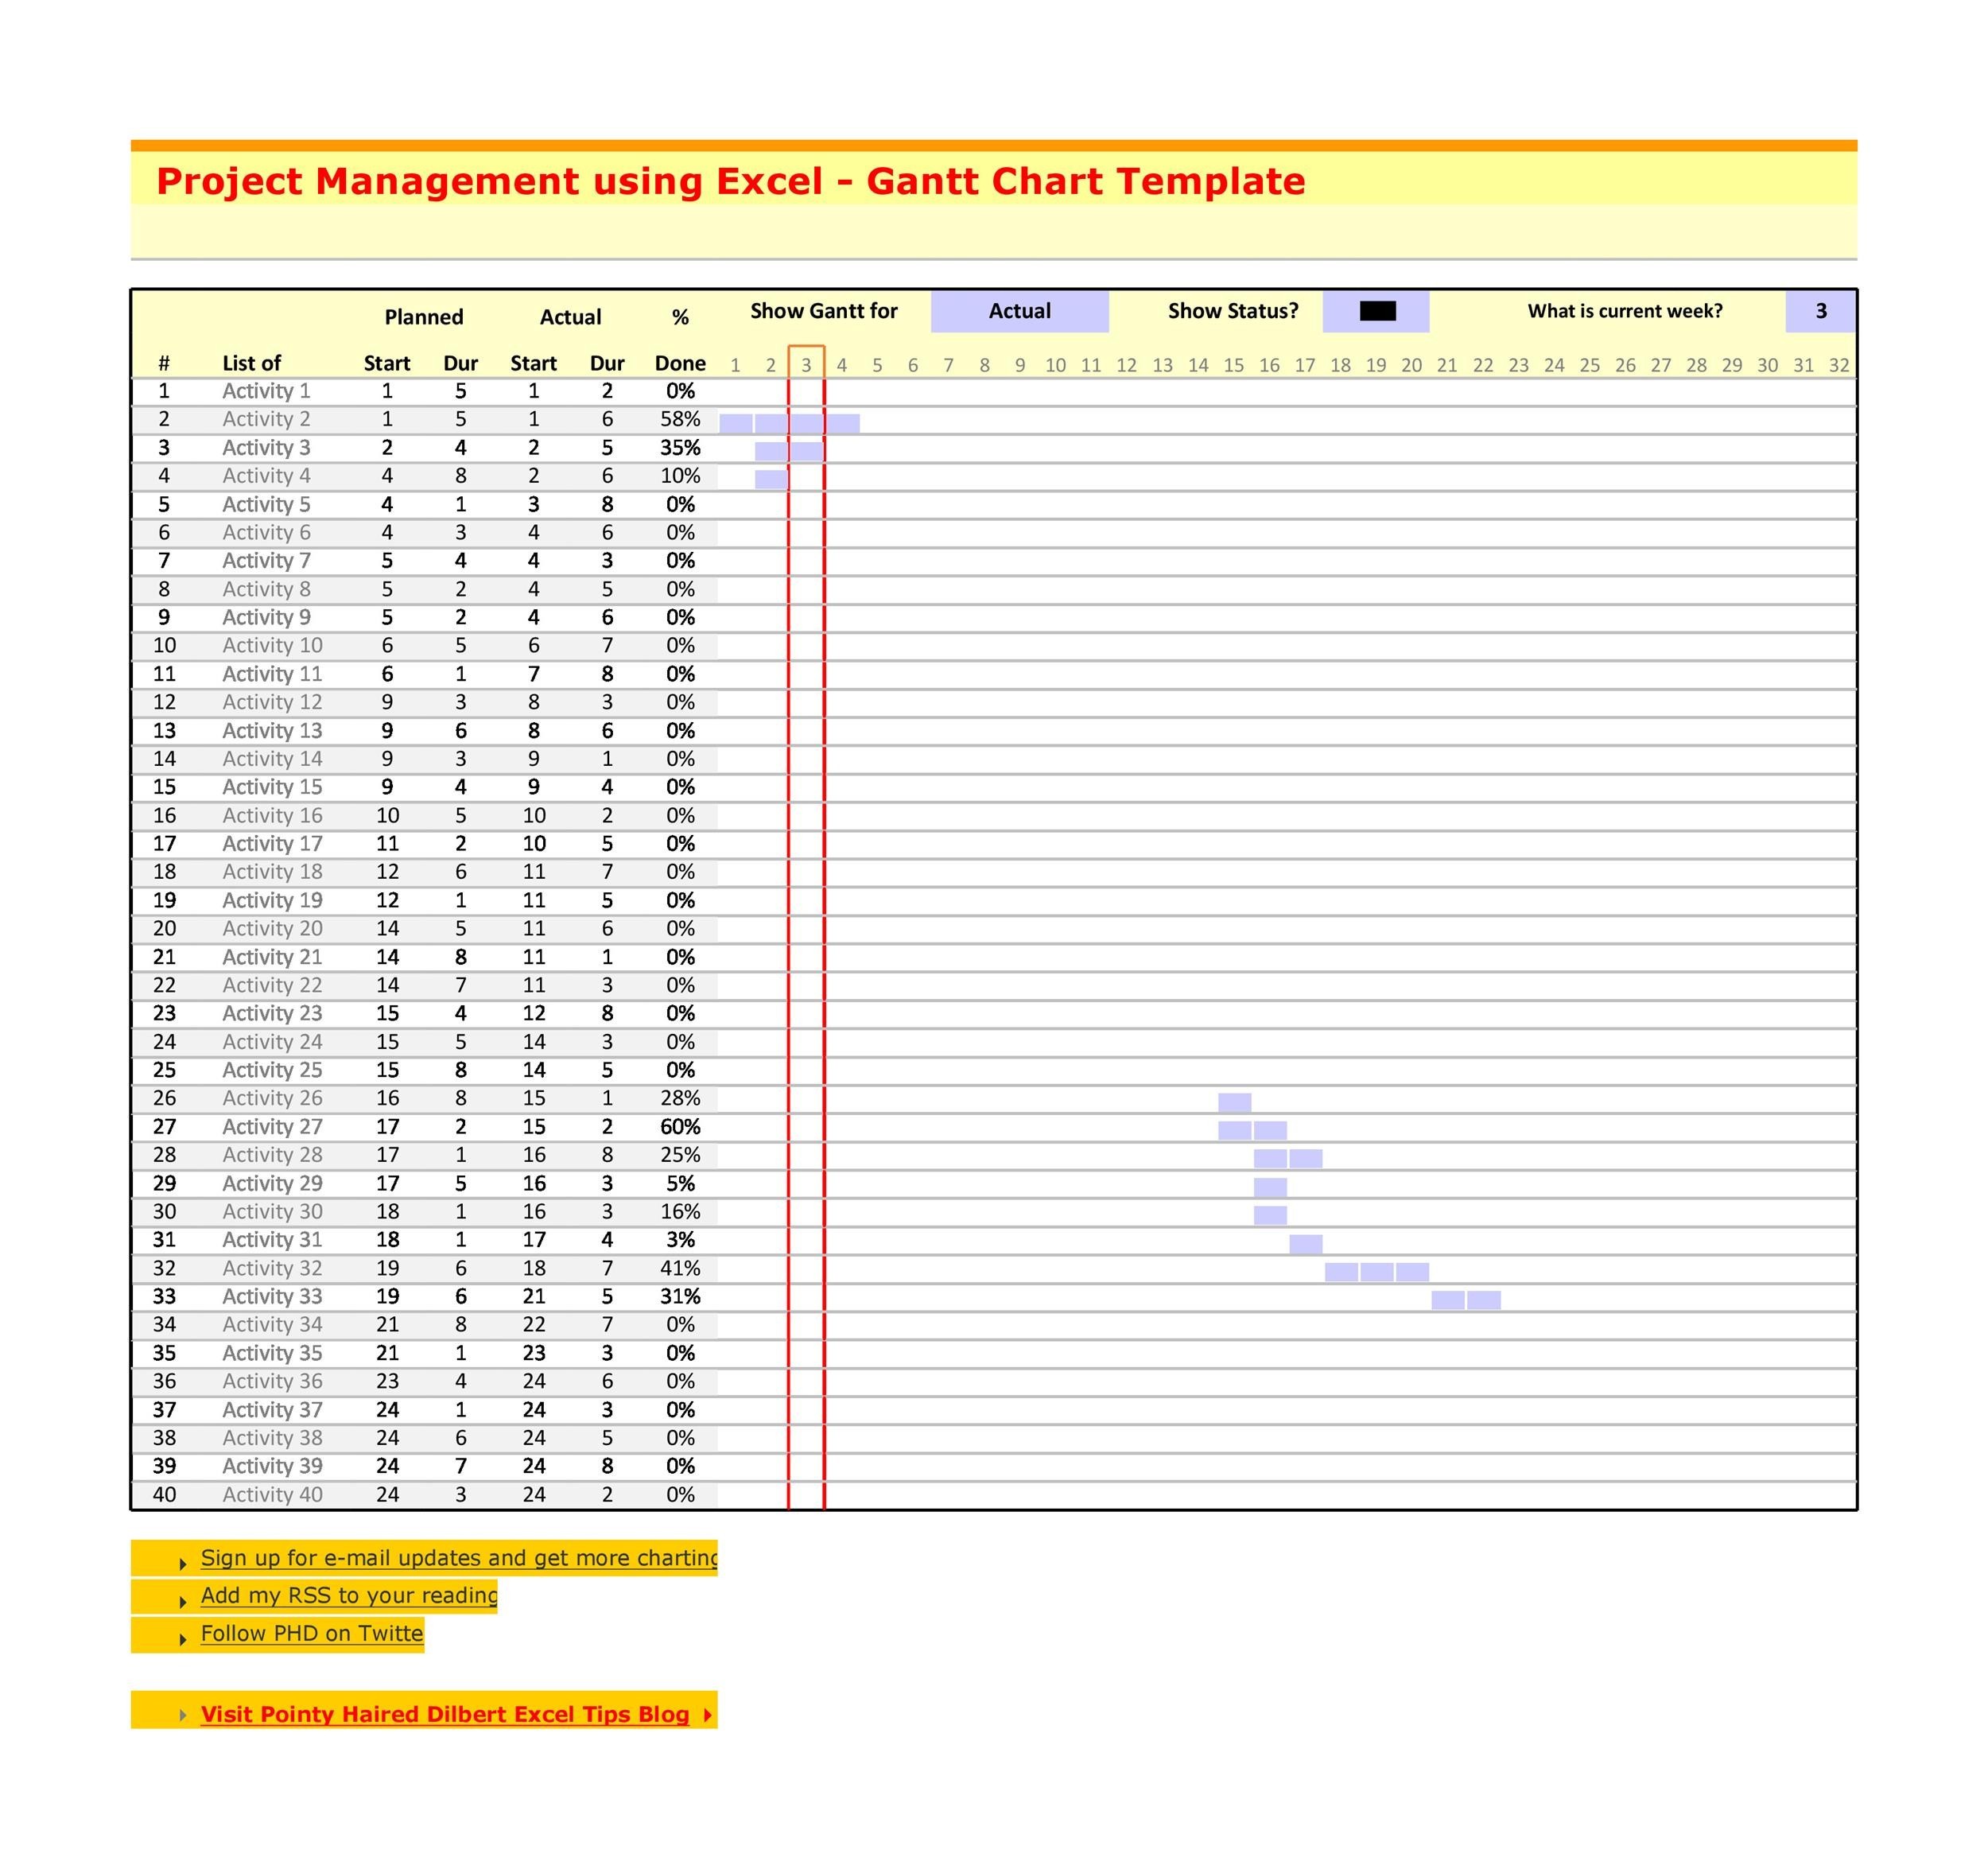 36 Free Gantt Chart Templates (Excel, PowerPoint, Word) ᐅ ...